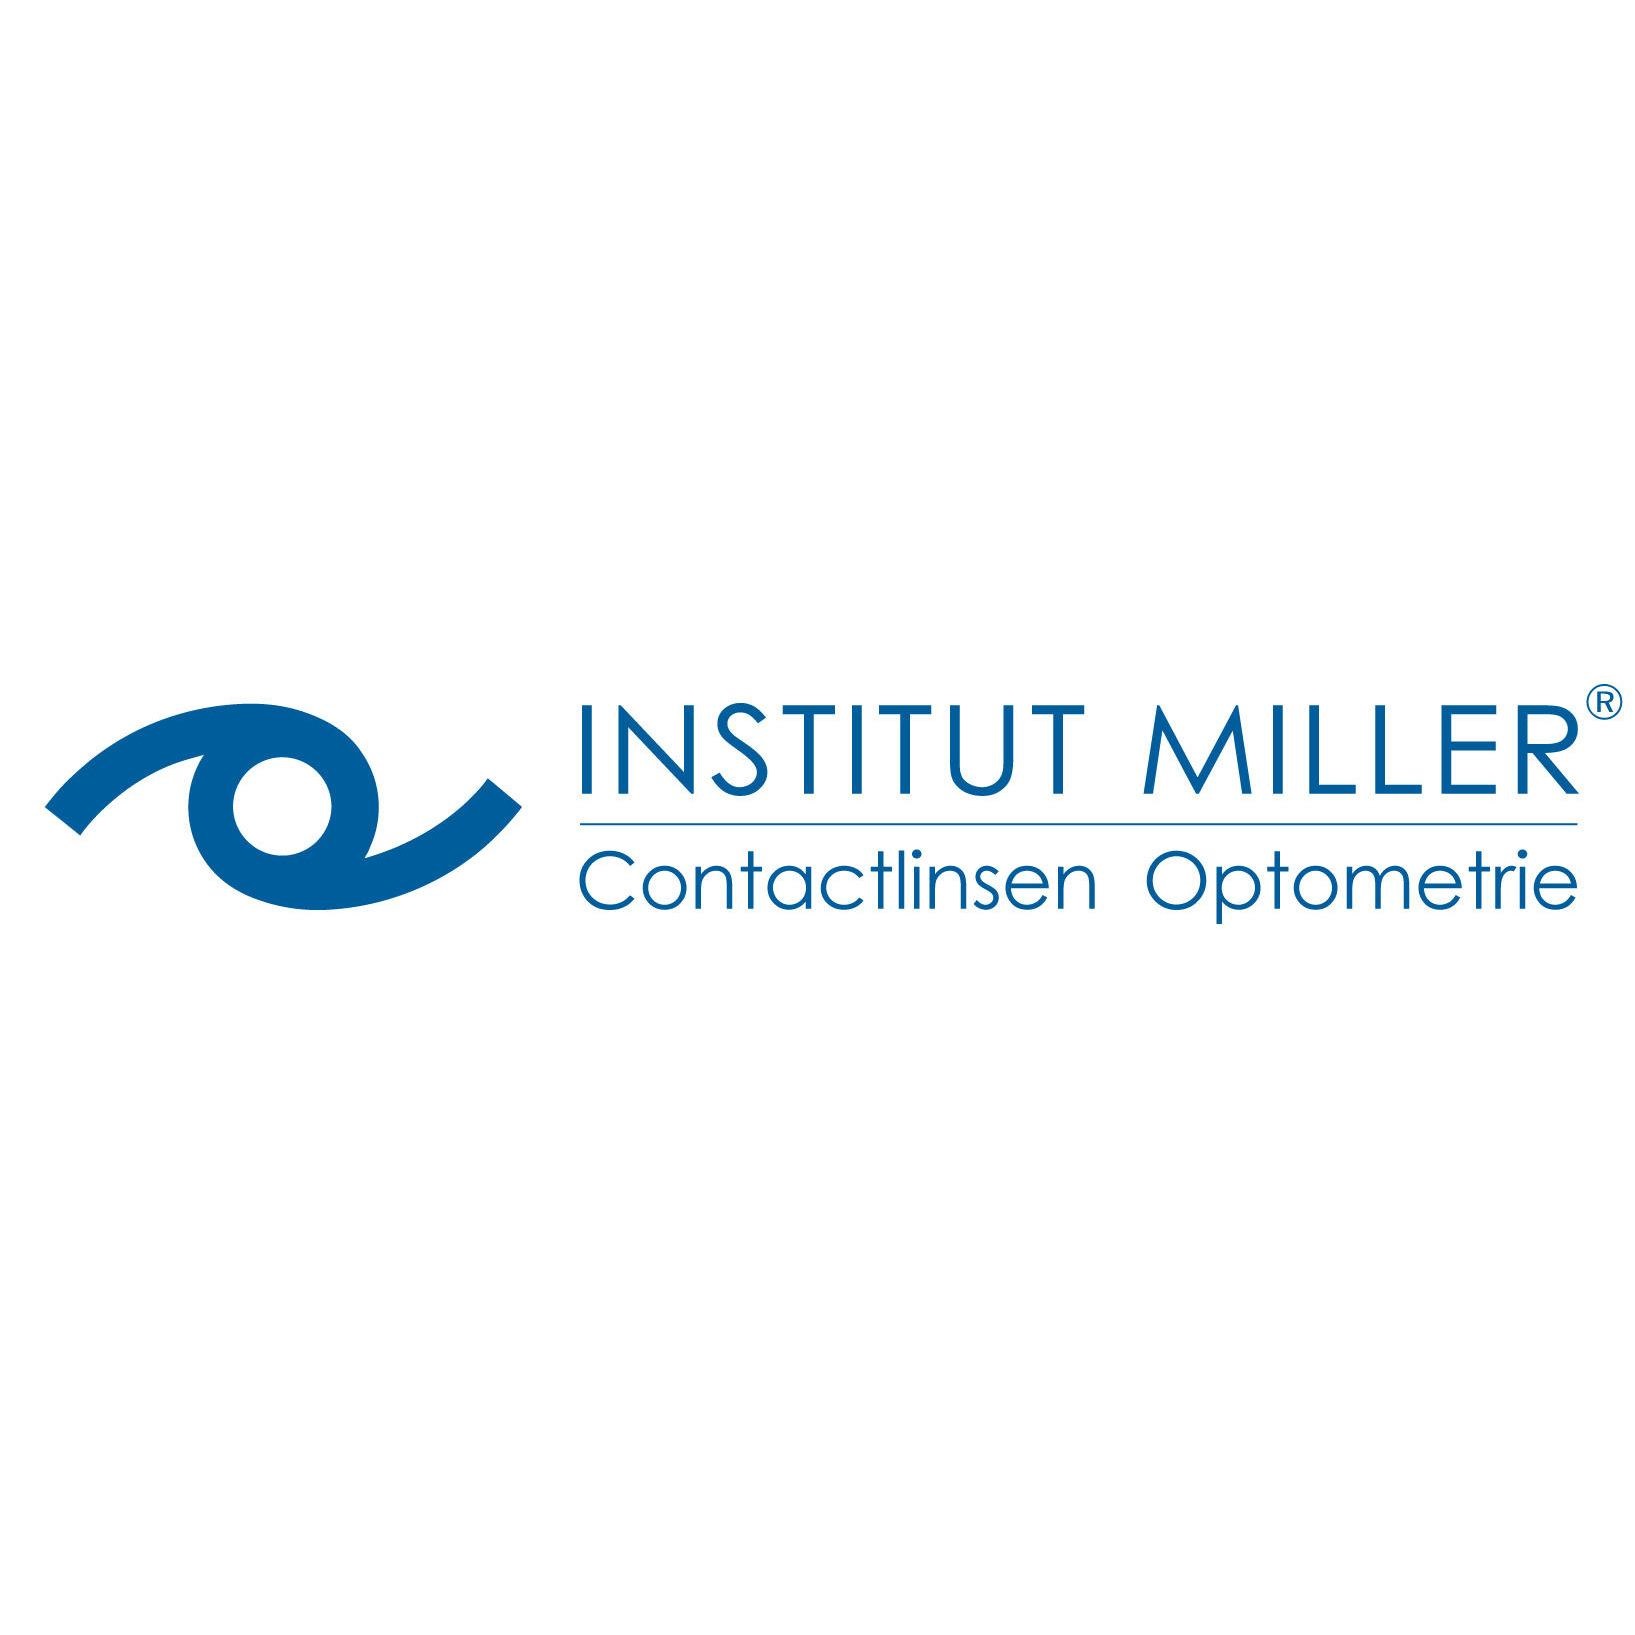 INSTITUT MILLER Contactlinsen Optometrie - Optometrist - Innsbruck - 0512 583725 Austria | ShowMeLocal.com